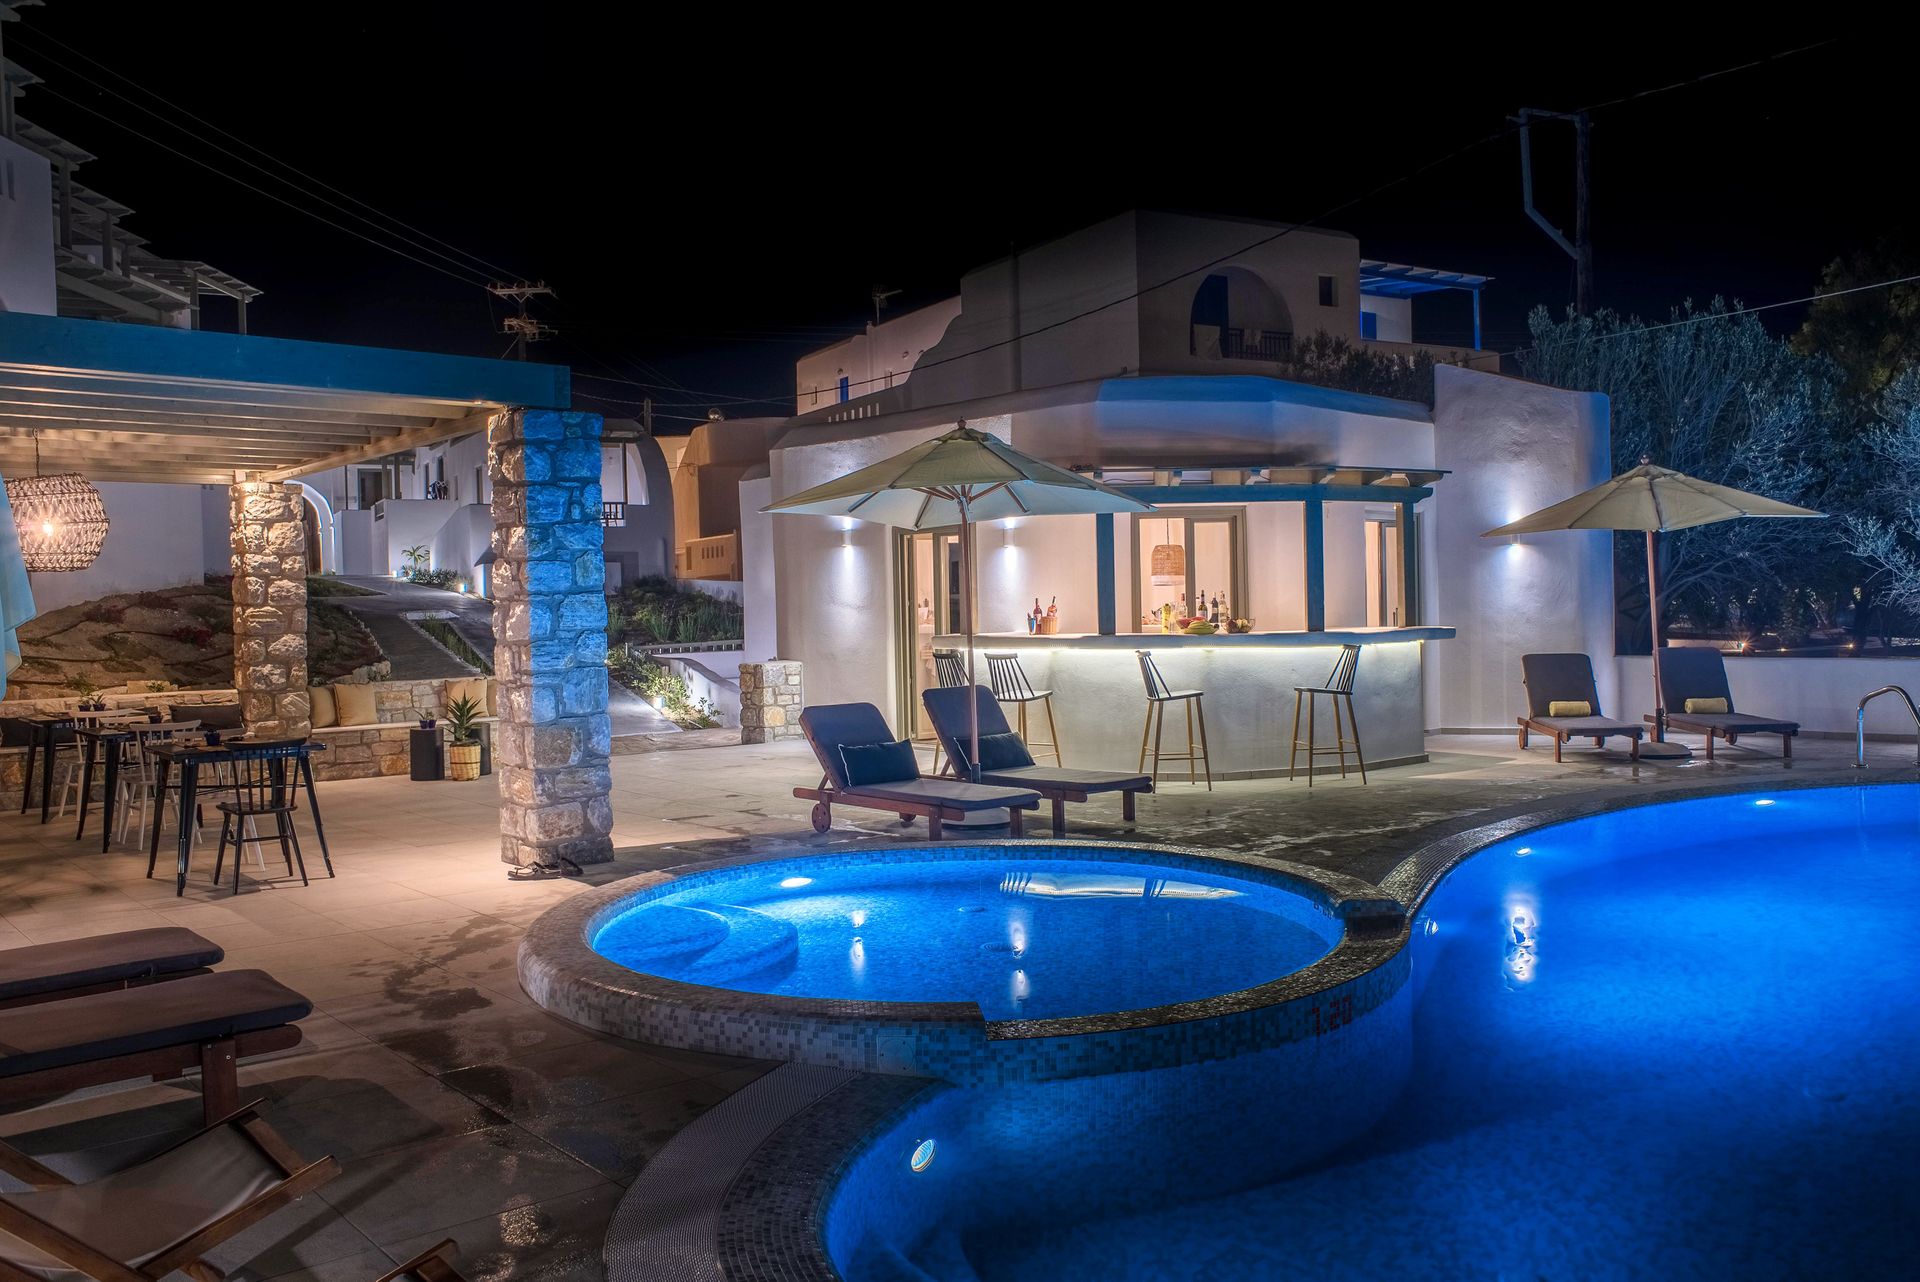 Melidron Hotel & Suites - Άγιος Προκόπιος, Νάξος ✦ 2 Ημέρες (1 Διανυκτέρευση) ✦ 2 άτομα ✦ 2 ✦ 15/05/2022 έως 30/09/2022 ✦ Κοντά σε Παραλία!